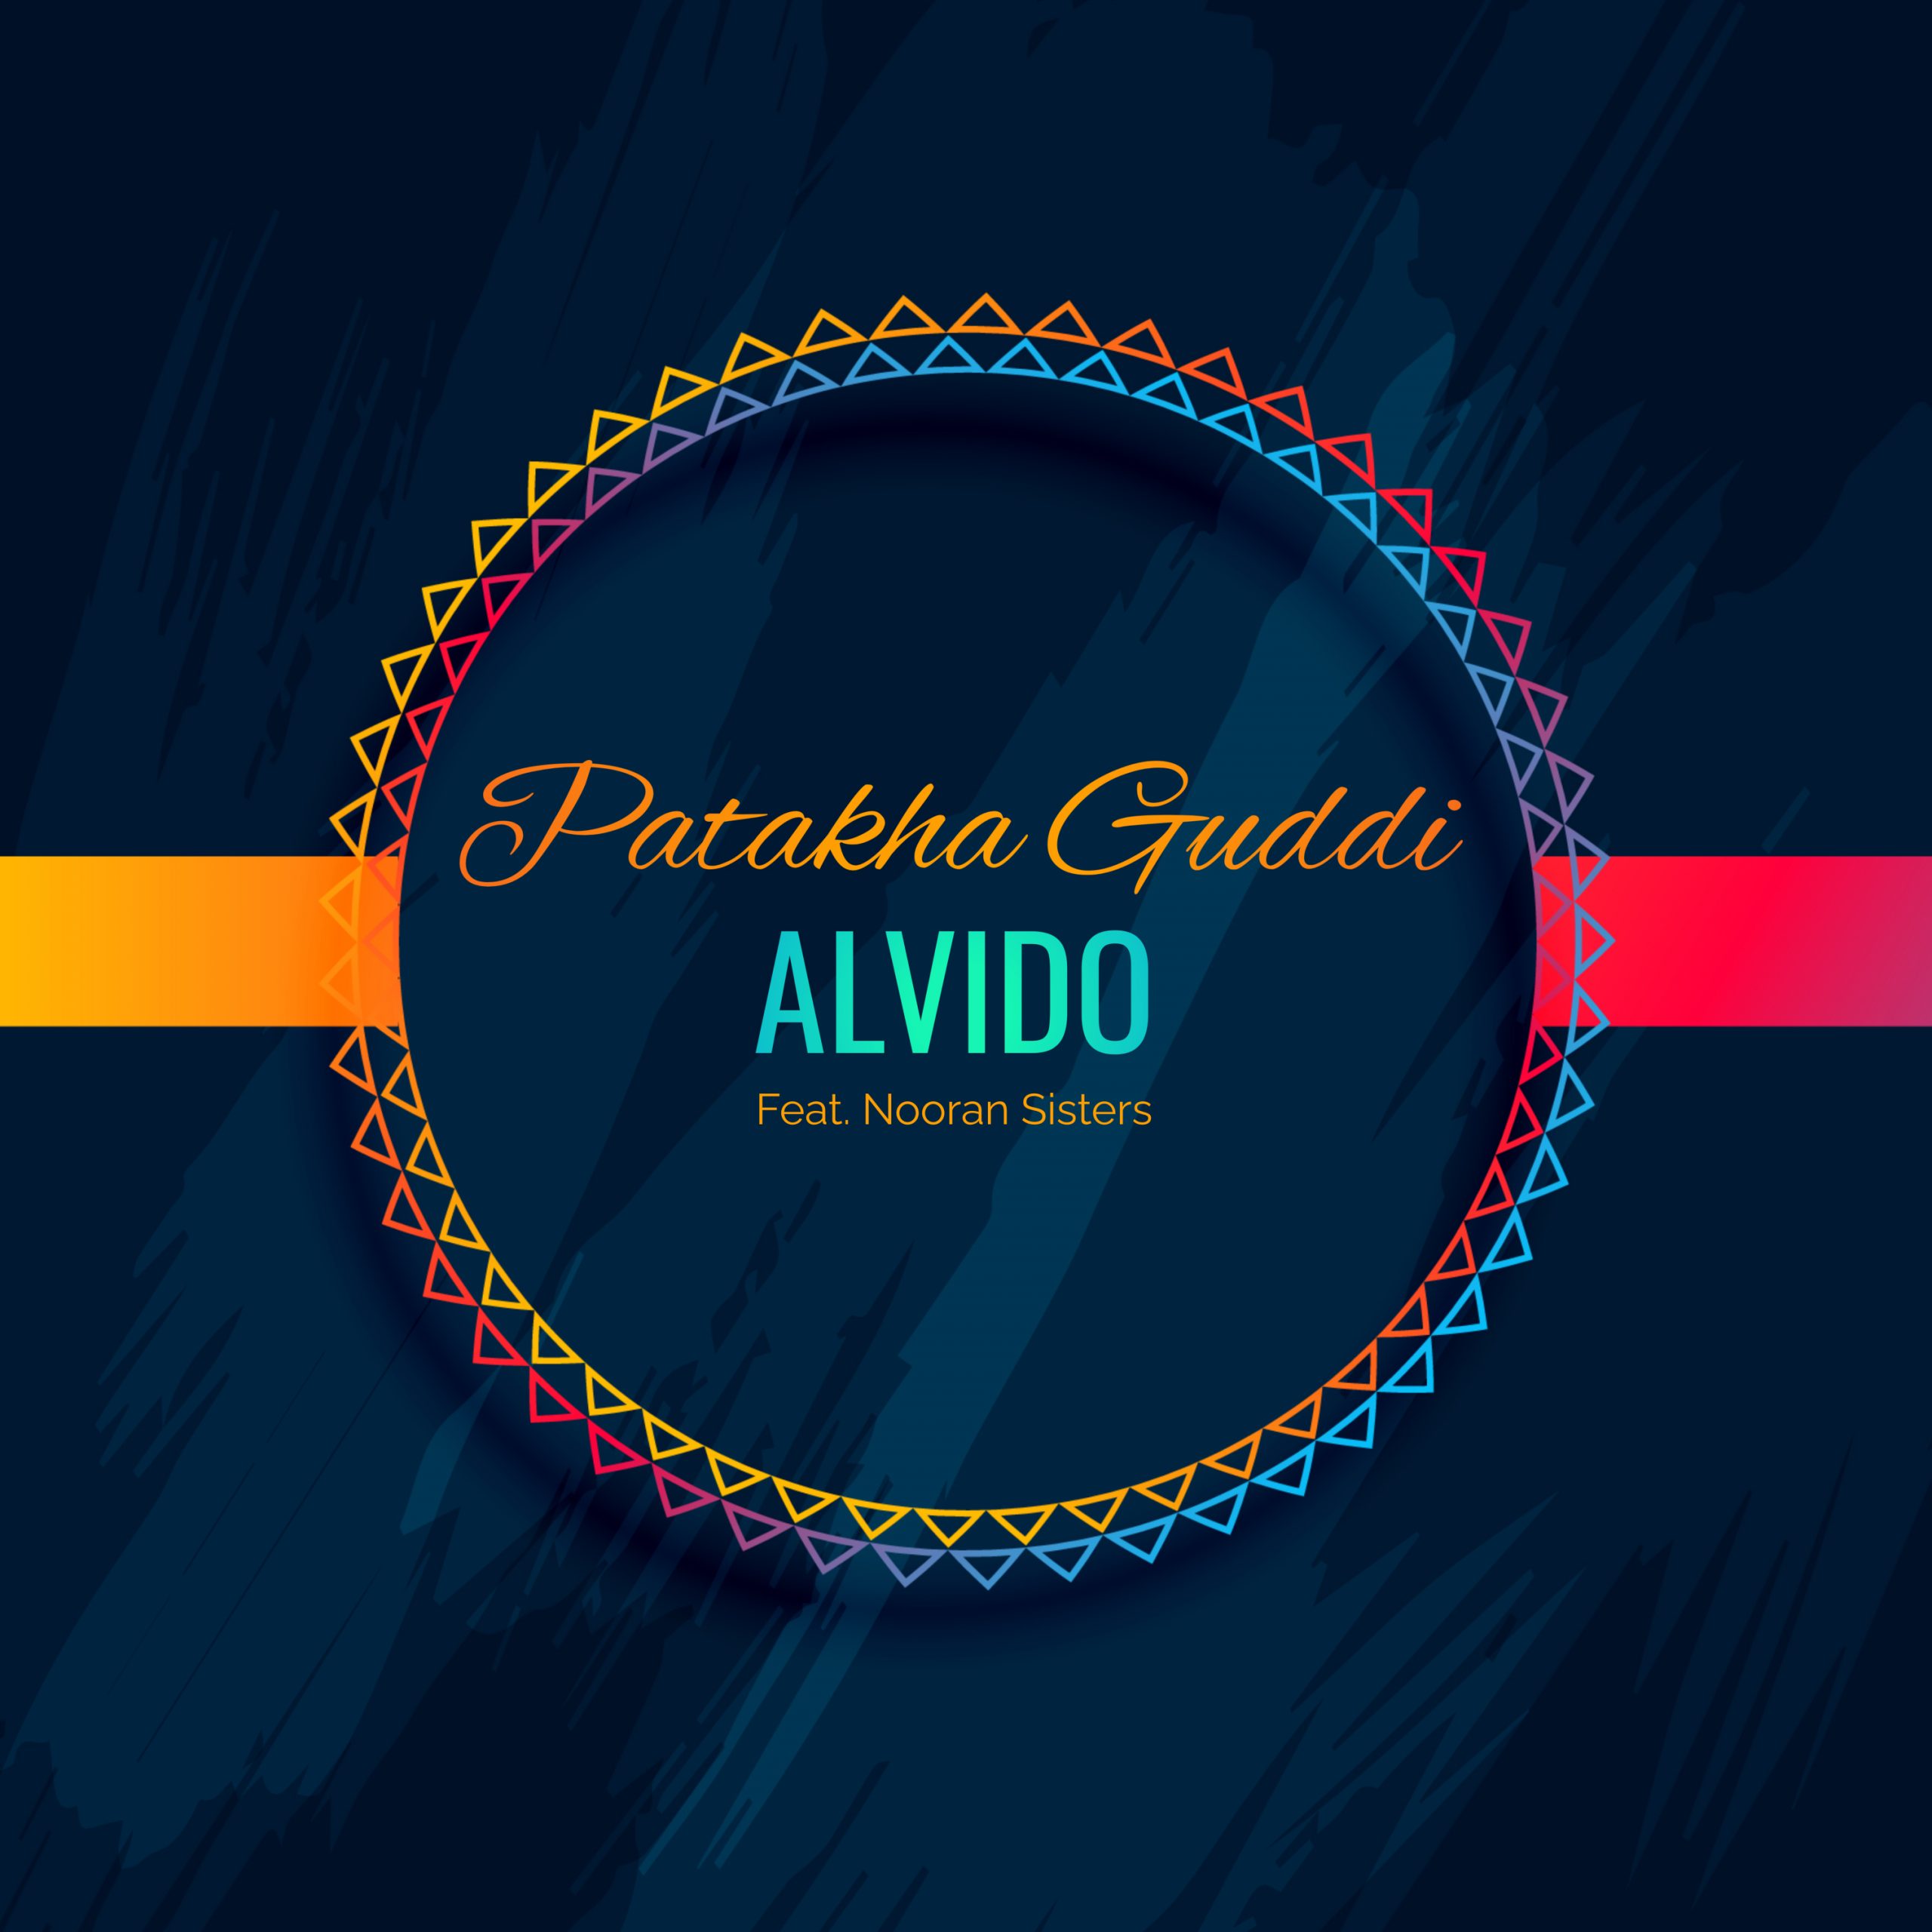 ‘Patkha Guddi’ is the uplifting and buzzing new single from ‘ALVIDO’.